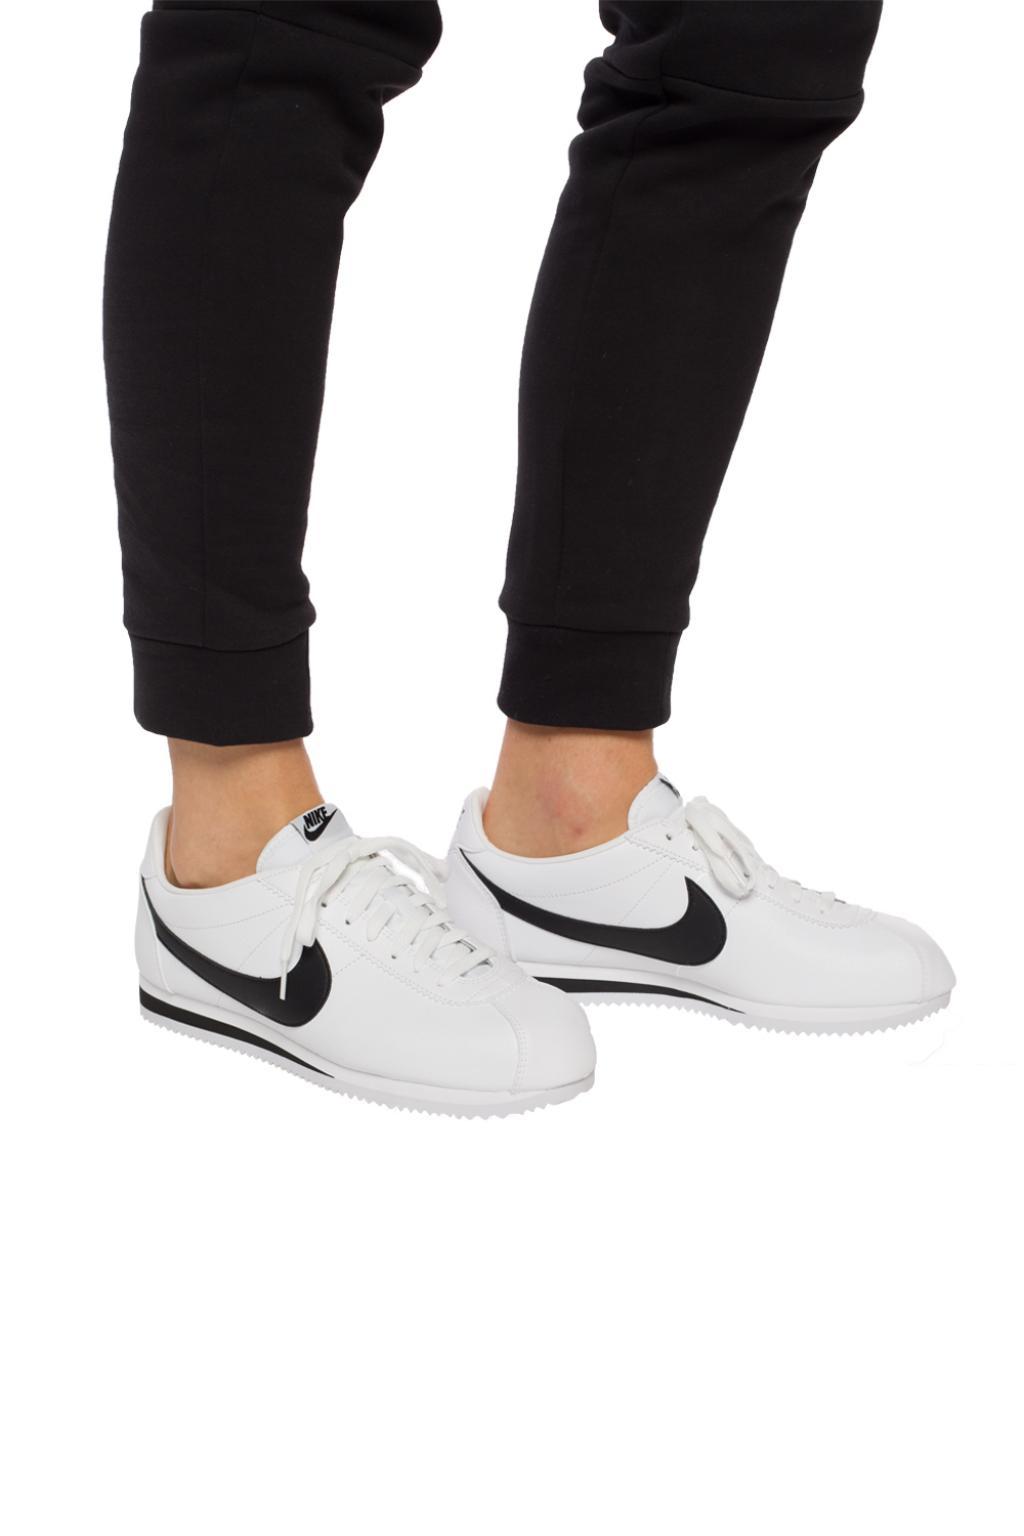 Nike Cortez Basic Leather Og Shoe in White/White/Black (White) - Save 58% |  Lyst